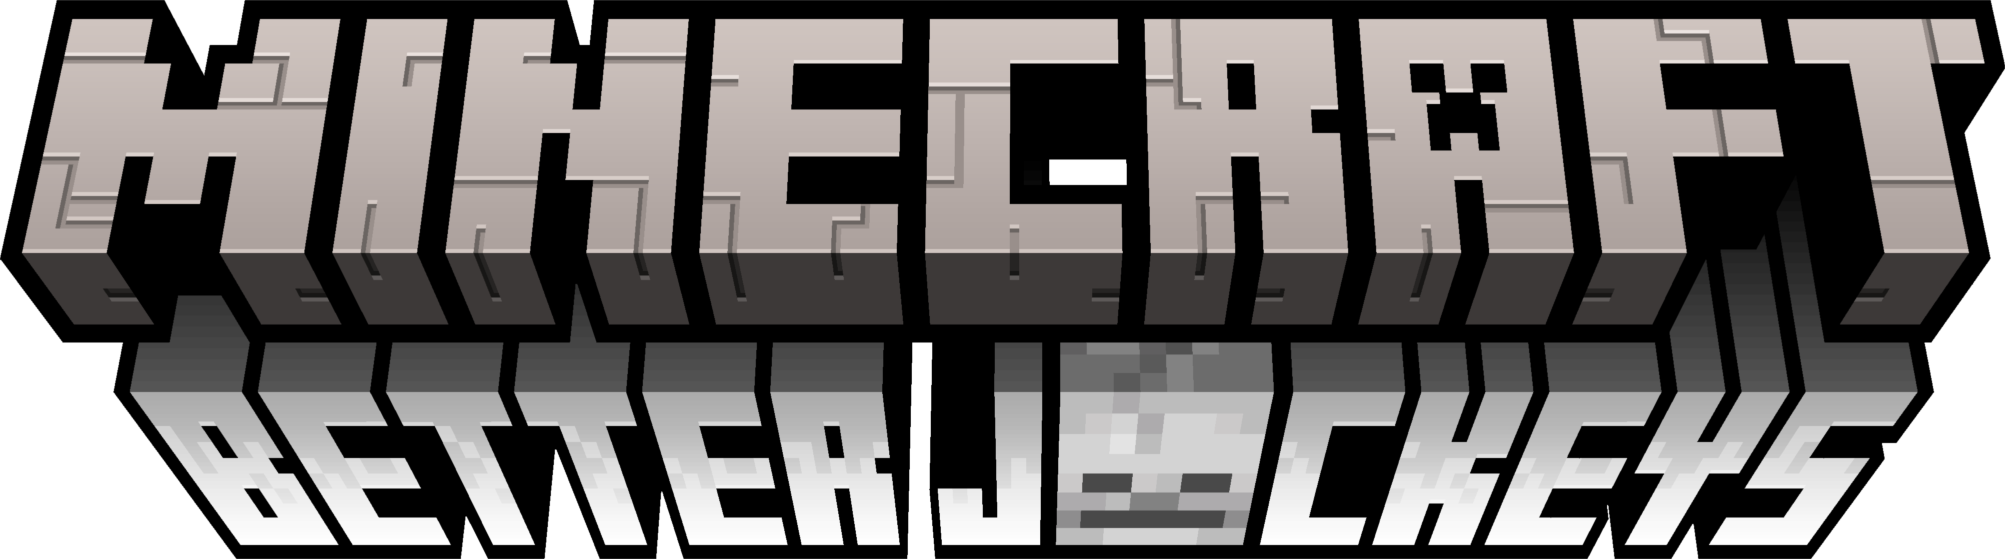 Better Jockeys Minecraft Texture Pack